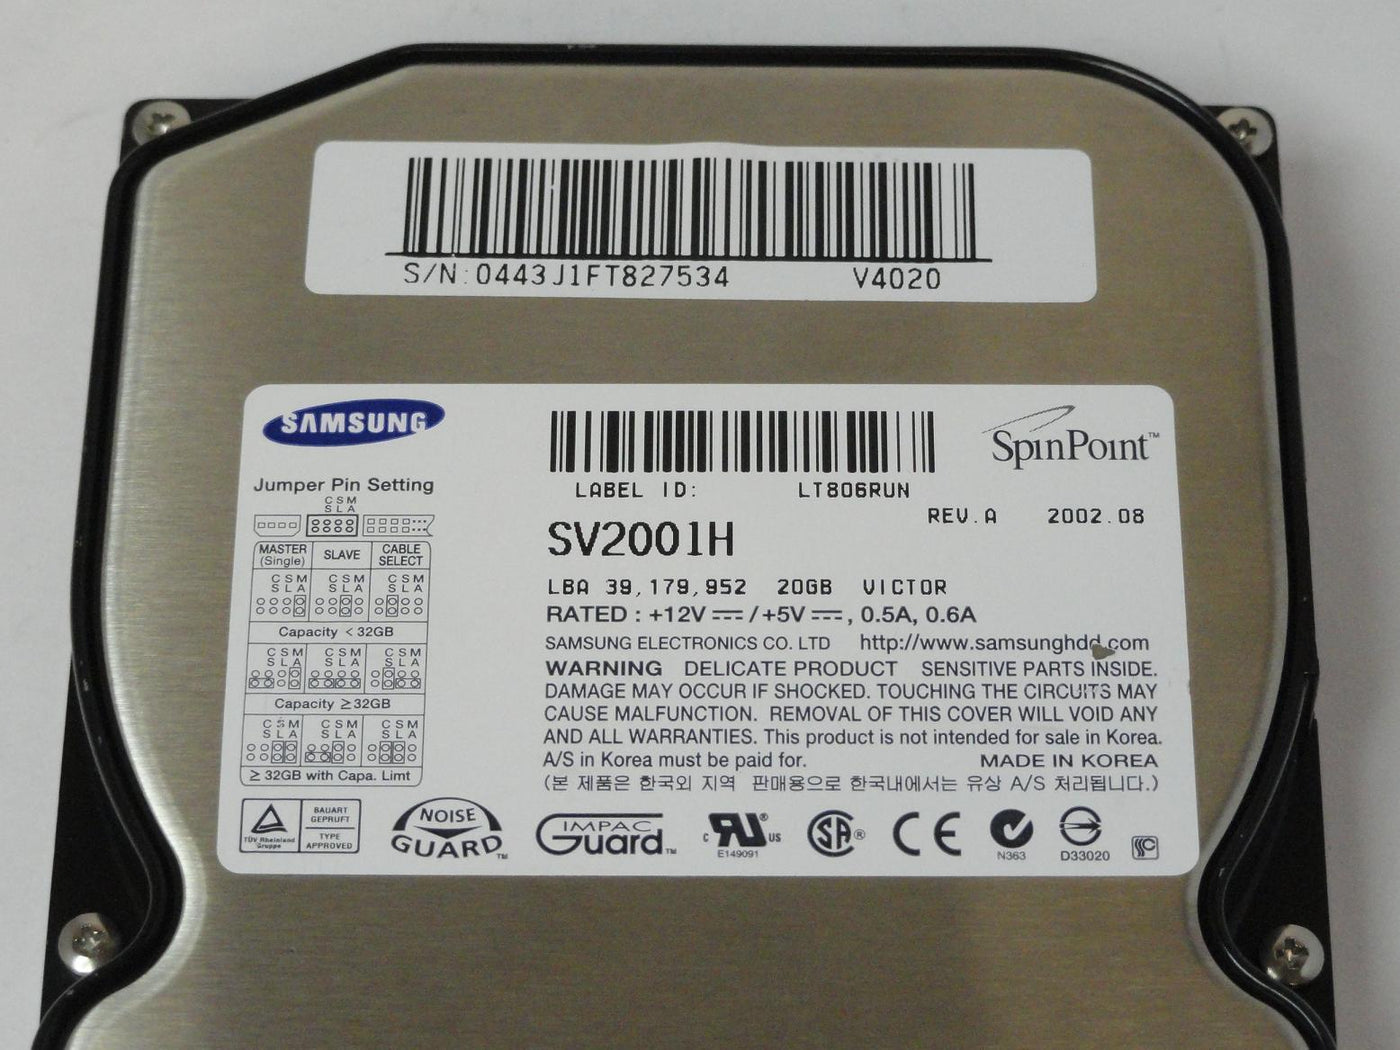 MC6662_SV2001H_Samsung 20 GB IDE 5400rpm 3.5in HDD - Image3